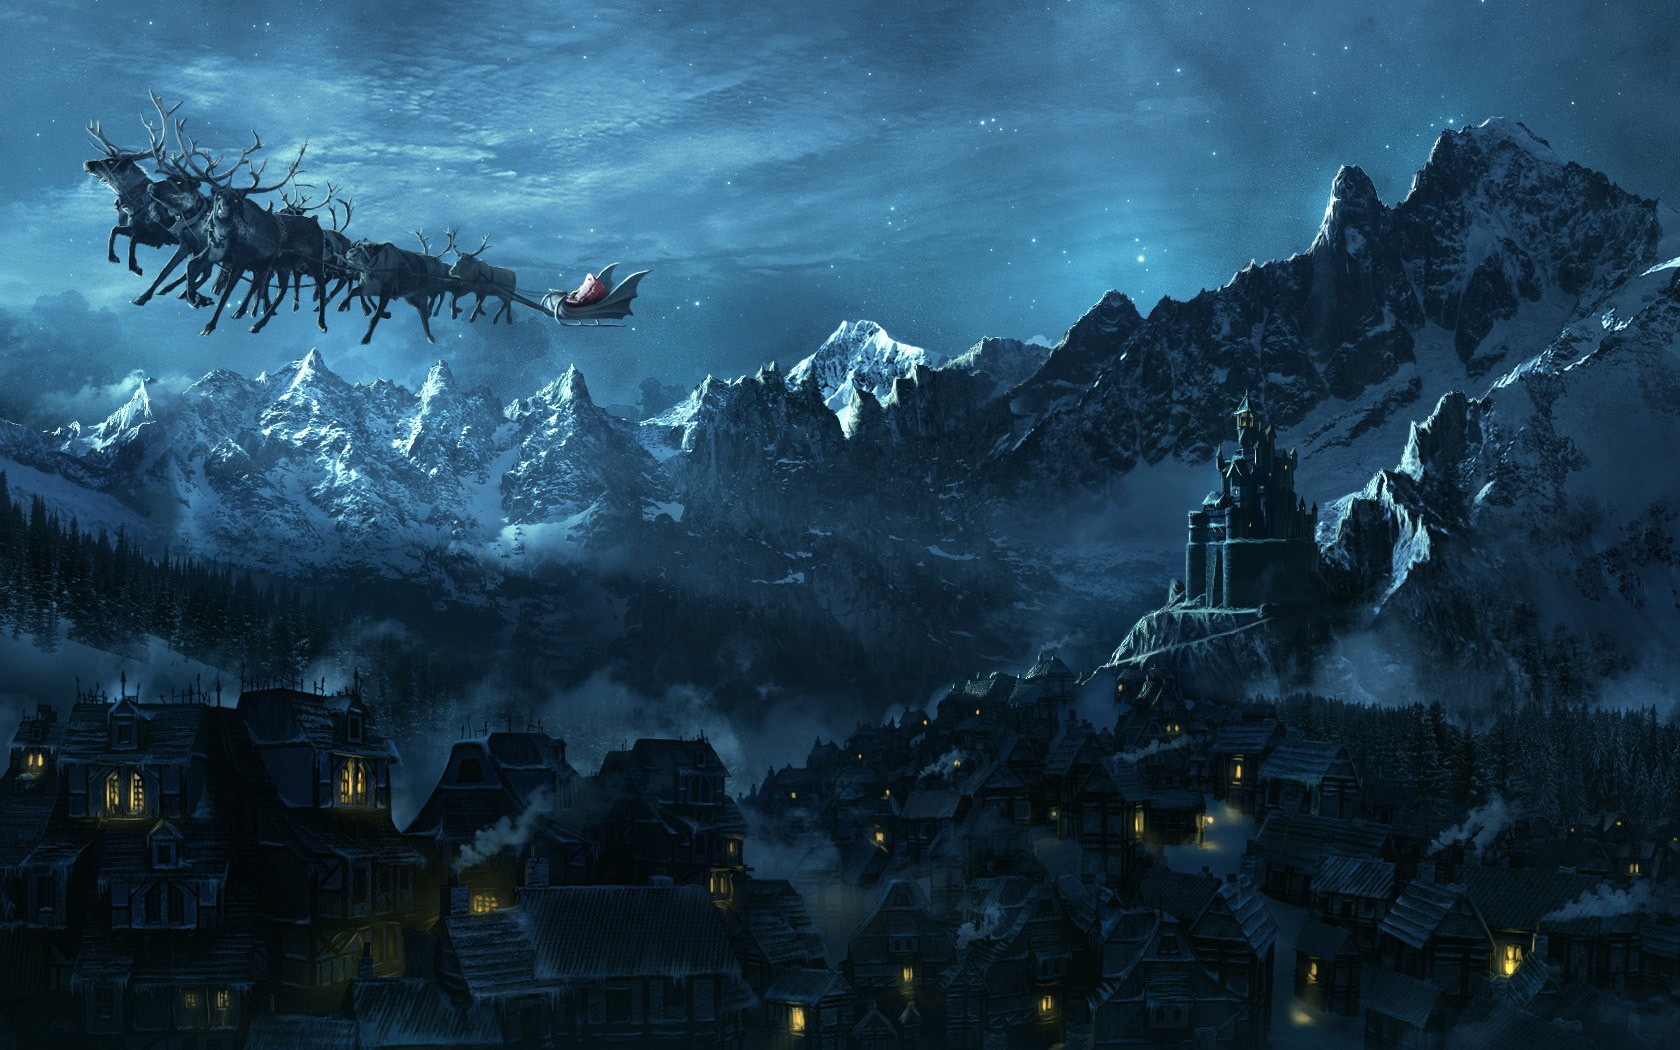 General 1680x1050 Christmas Santa Claus landscape fantasy art castle village night sky mountains reindeer